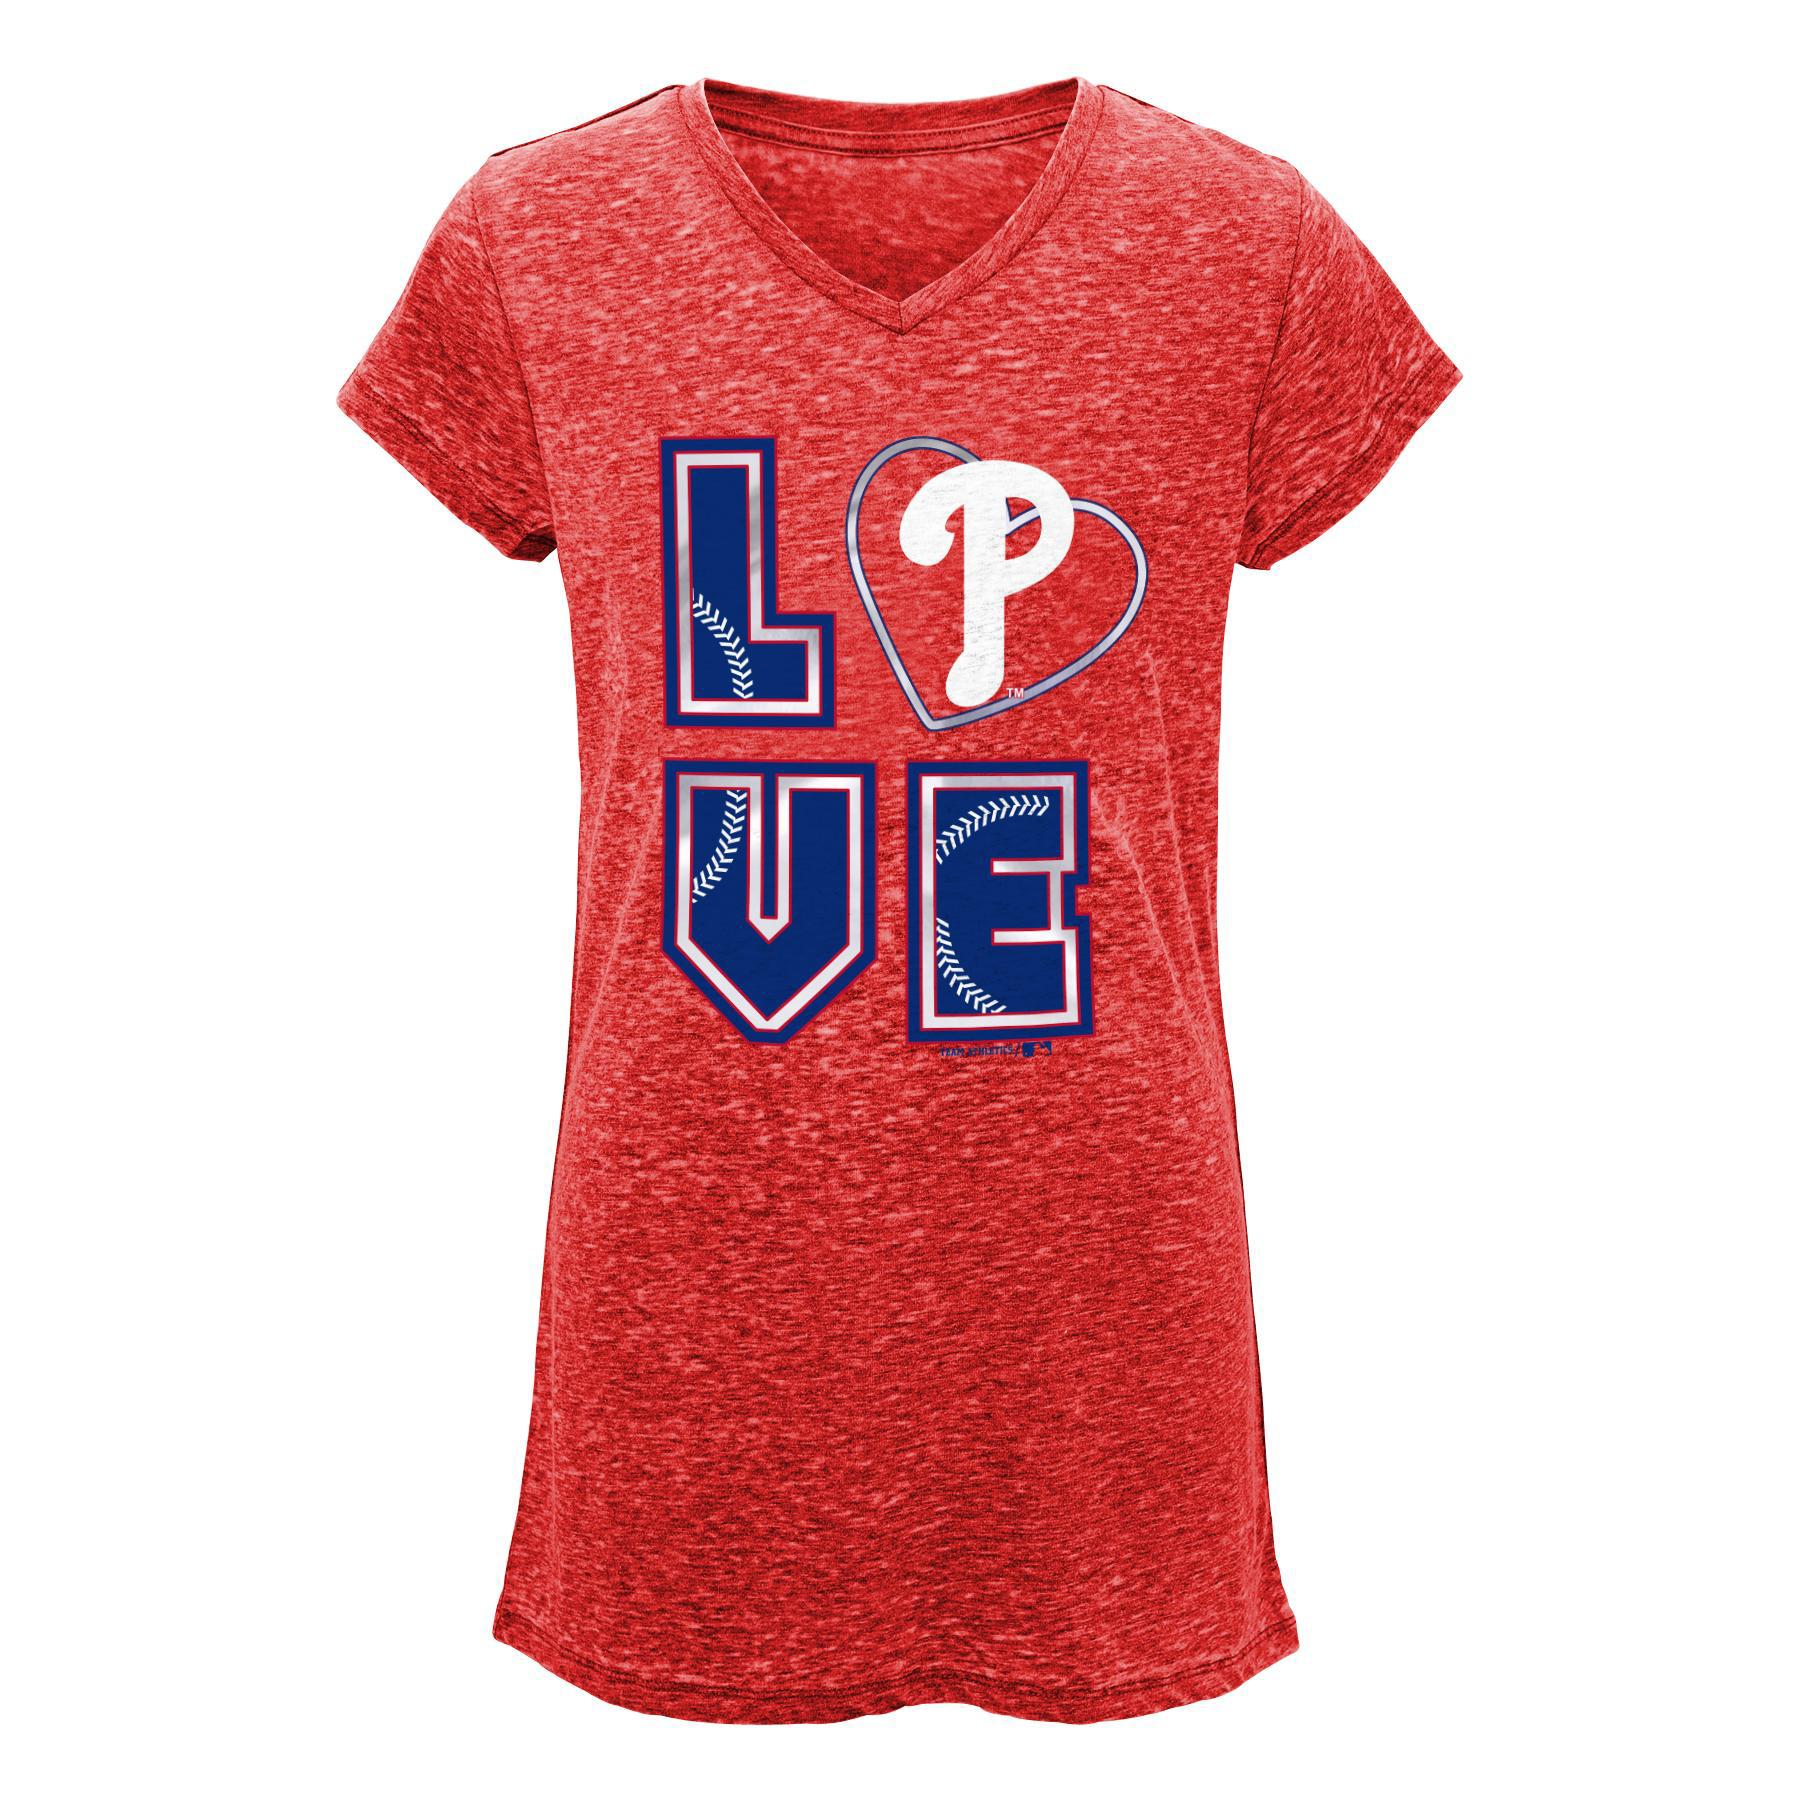 MLB Girls' Burnout T-Shirt - Philadelphia Phillies